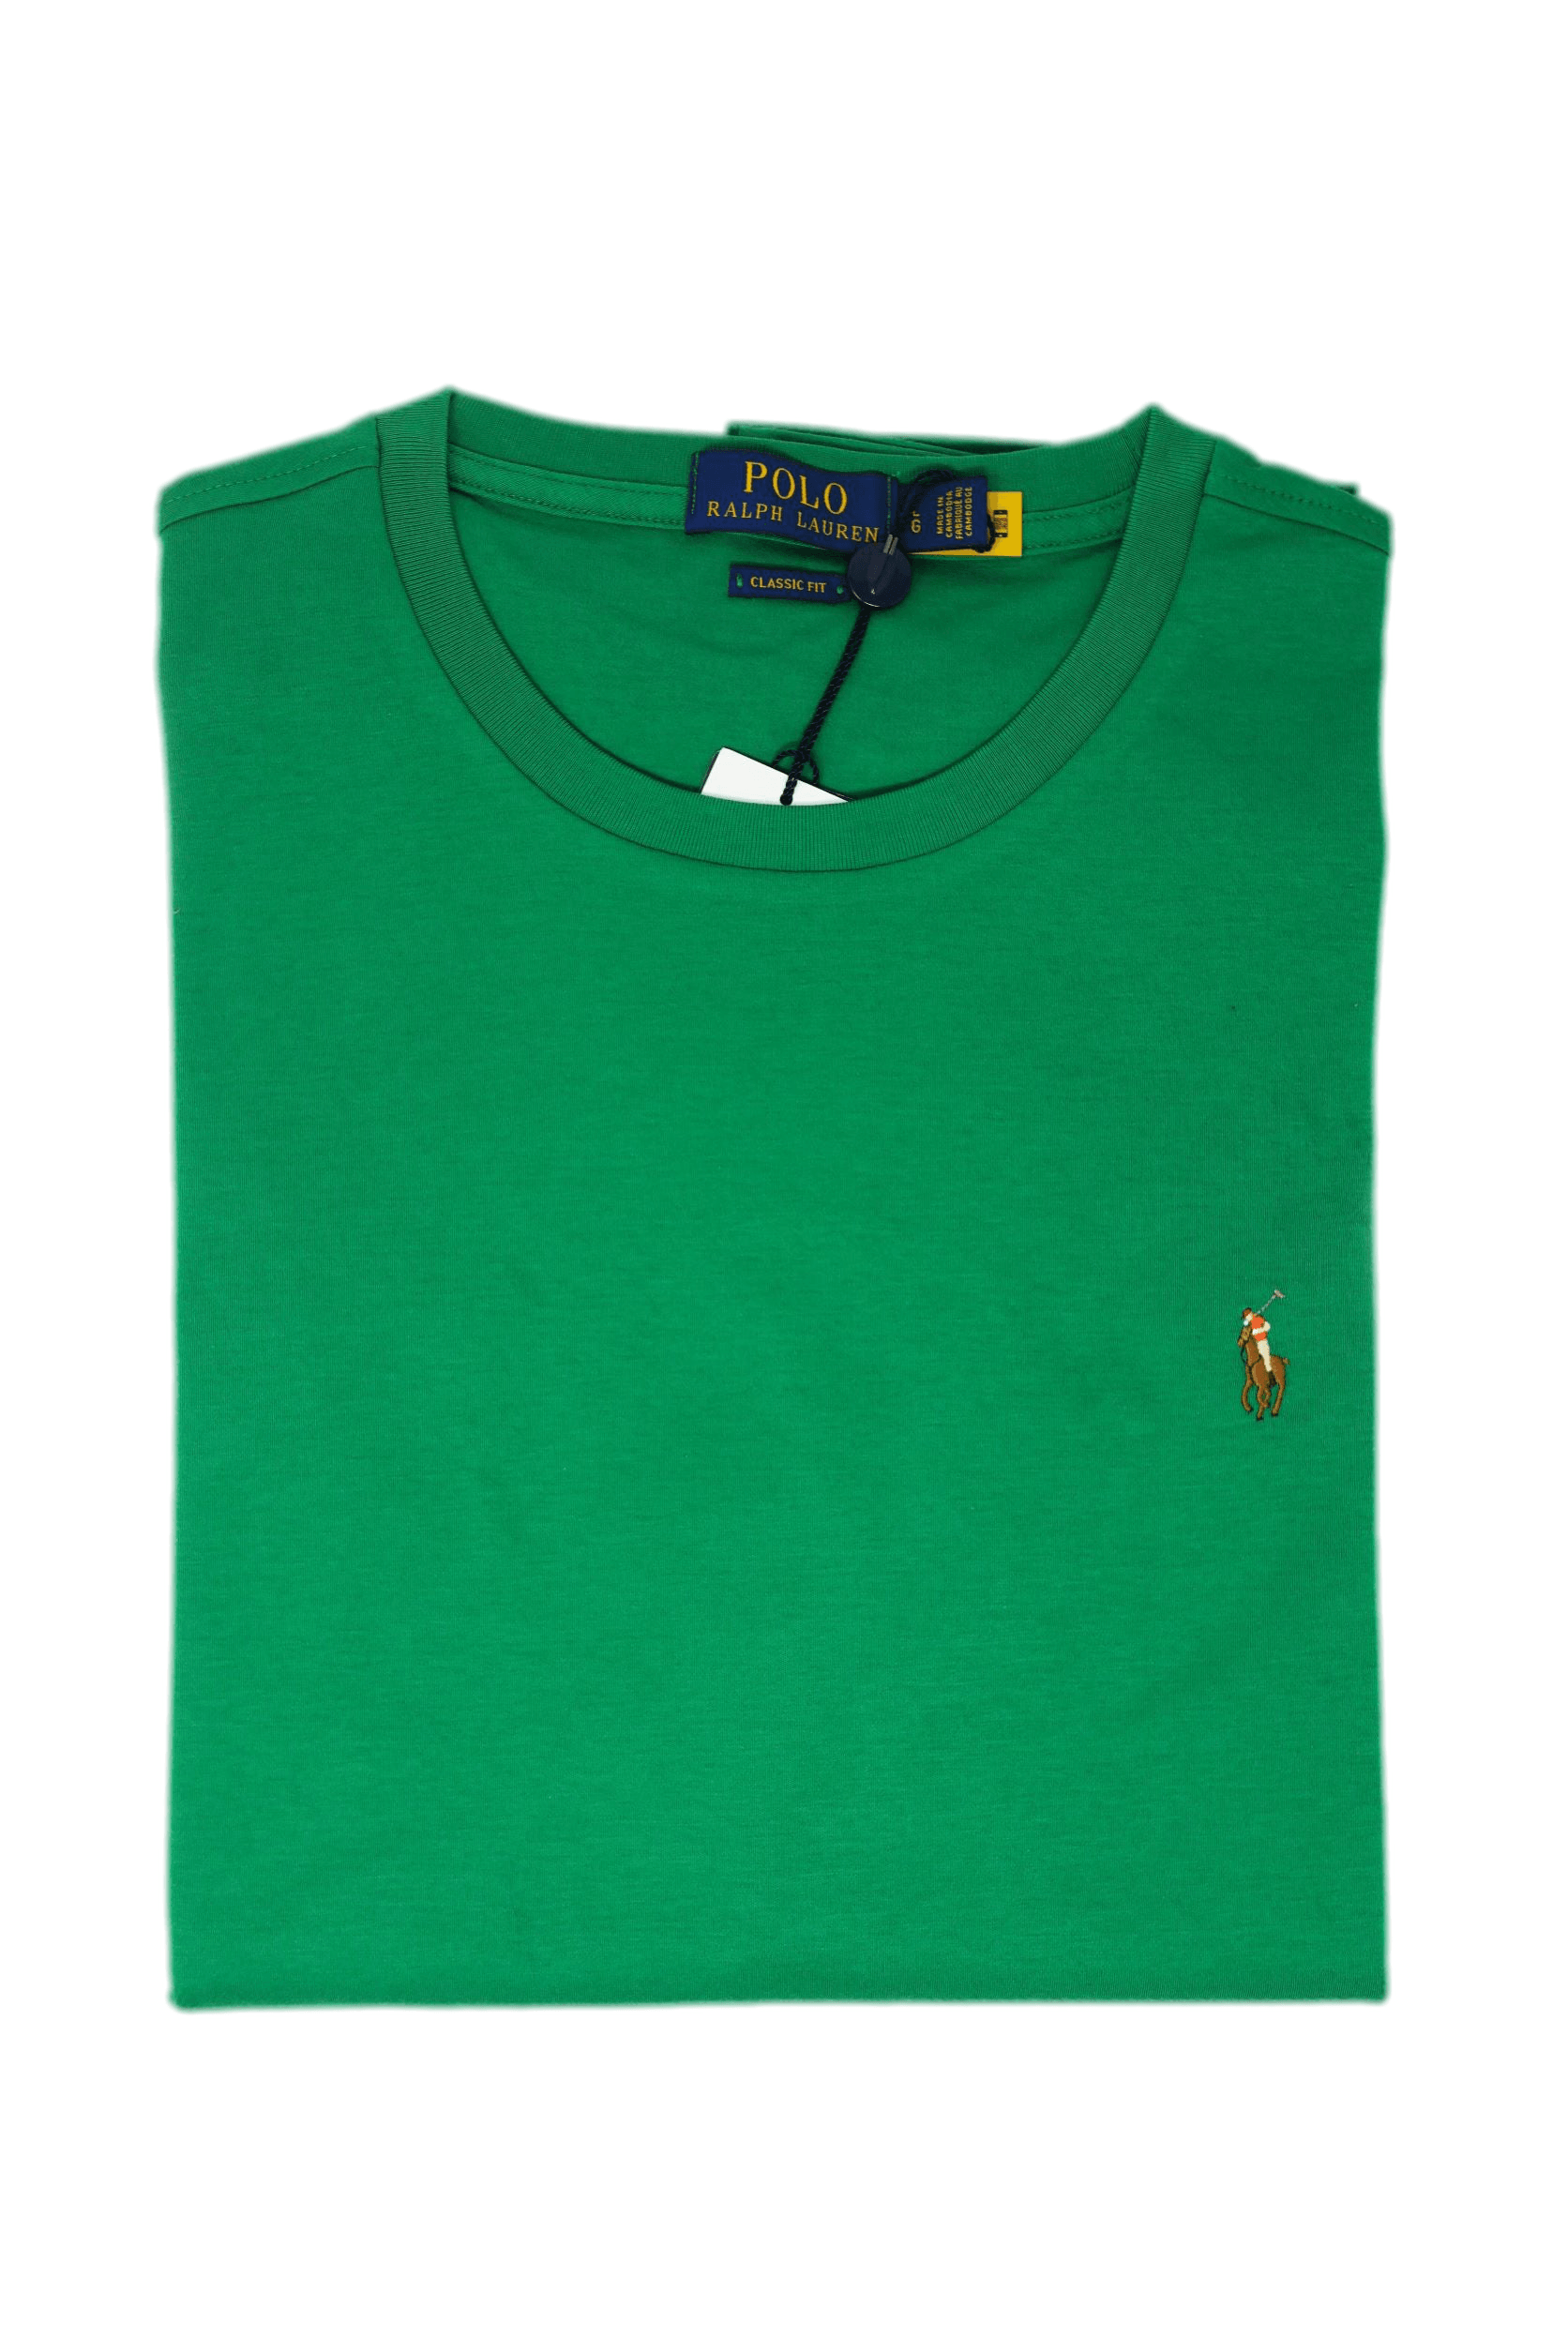 Laflamme- T-shirt vert classique - Ralph lauren